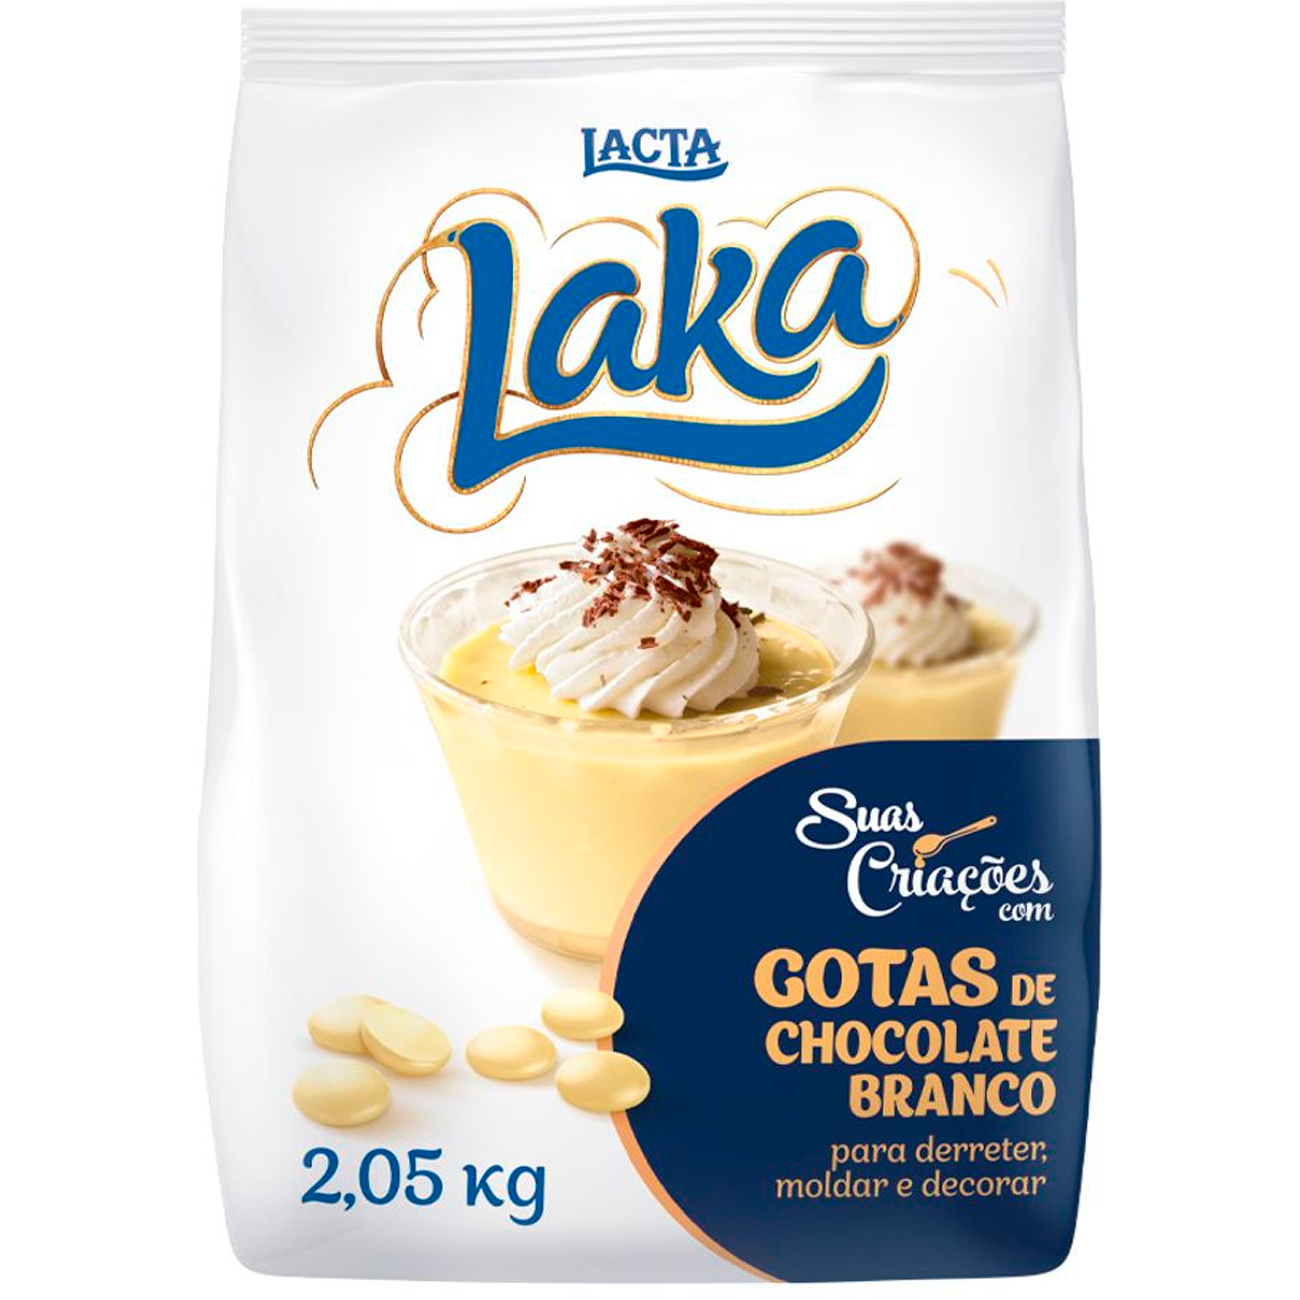 Gotas de Chocolate Lacta Laka Branco 2,05kg - Compra Food Service